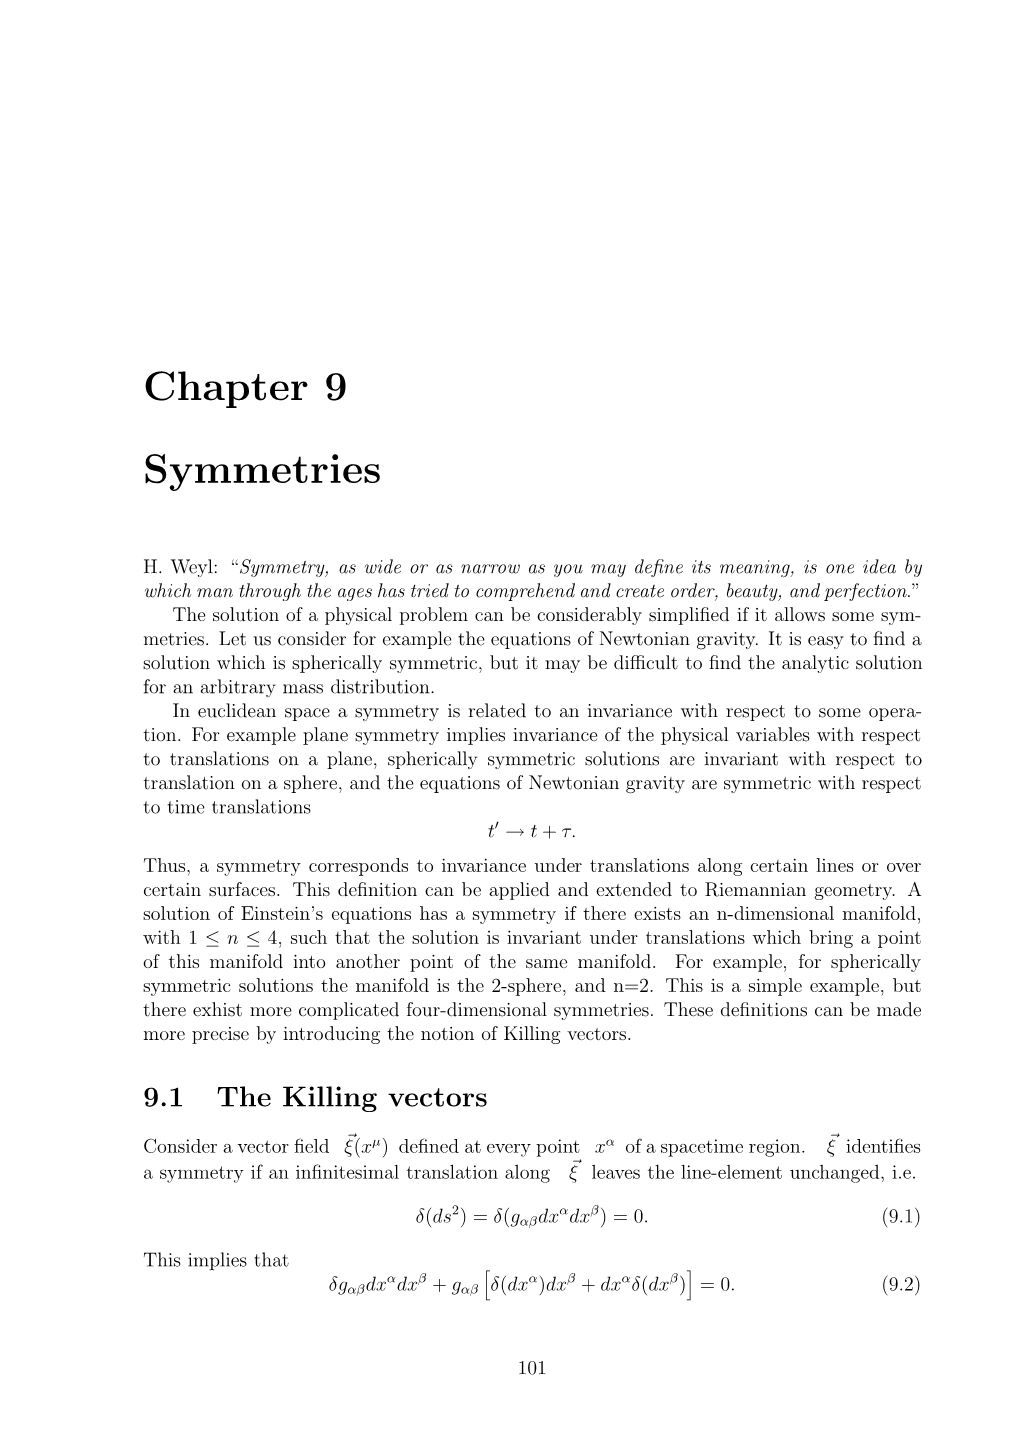 Chapter 9 Symmetries